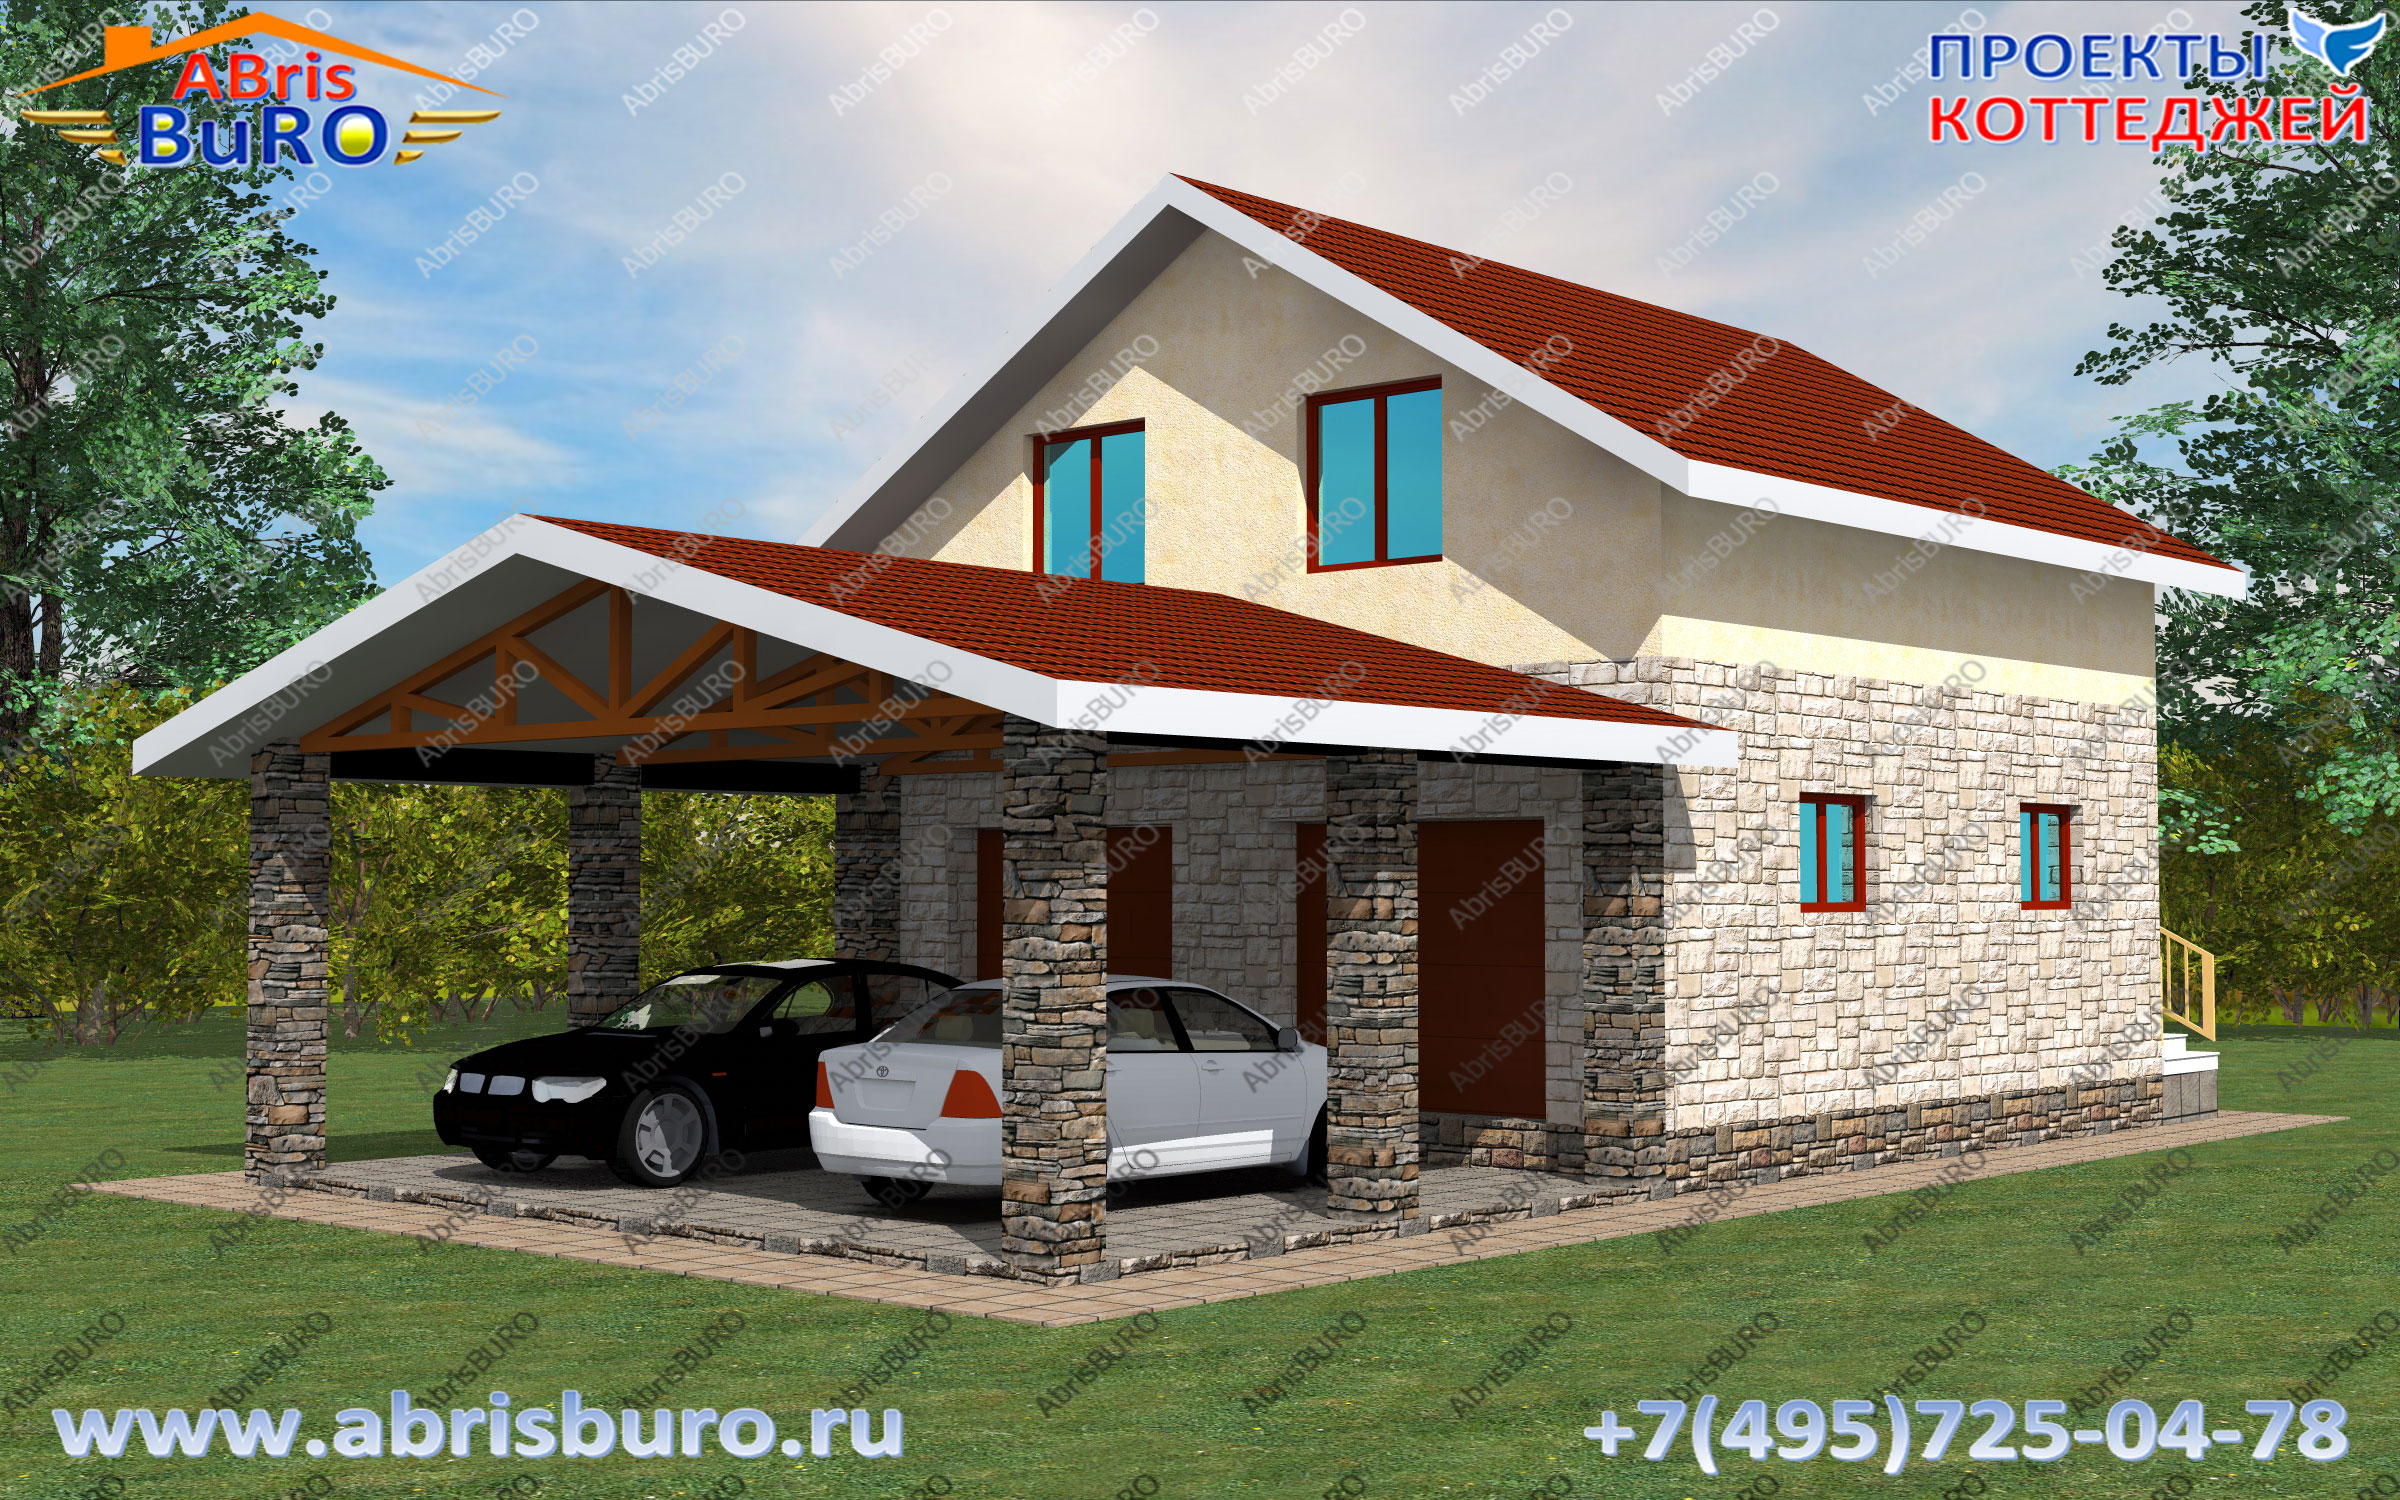 K1195-109 Проект гостевого дома с гаражом и парковкой www.abrisburo.ru